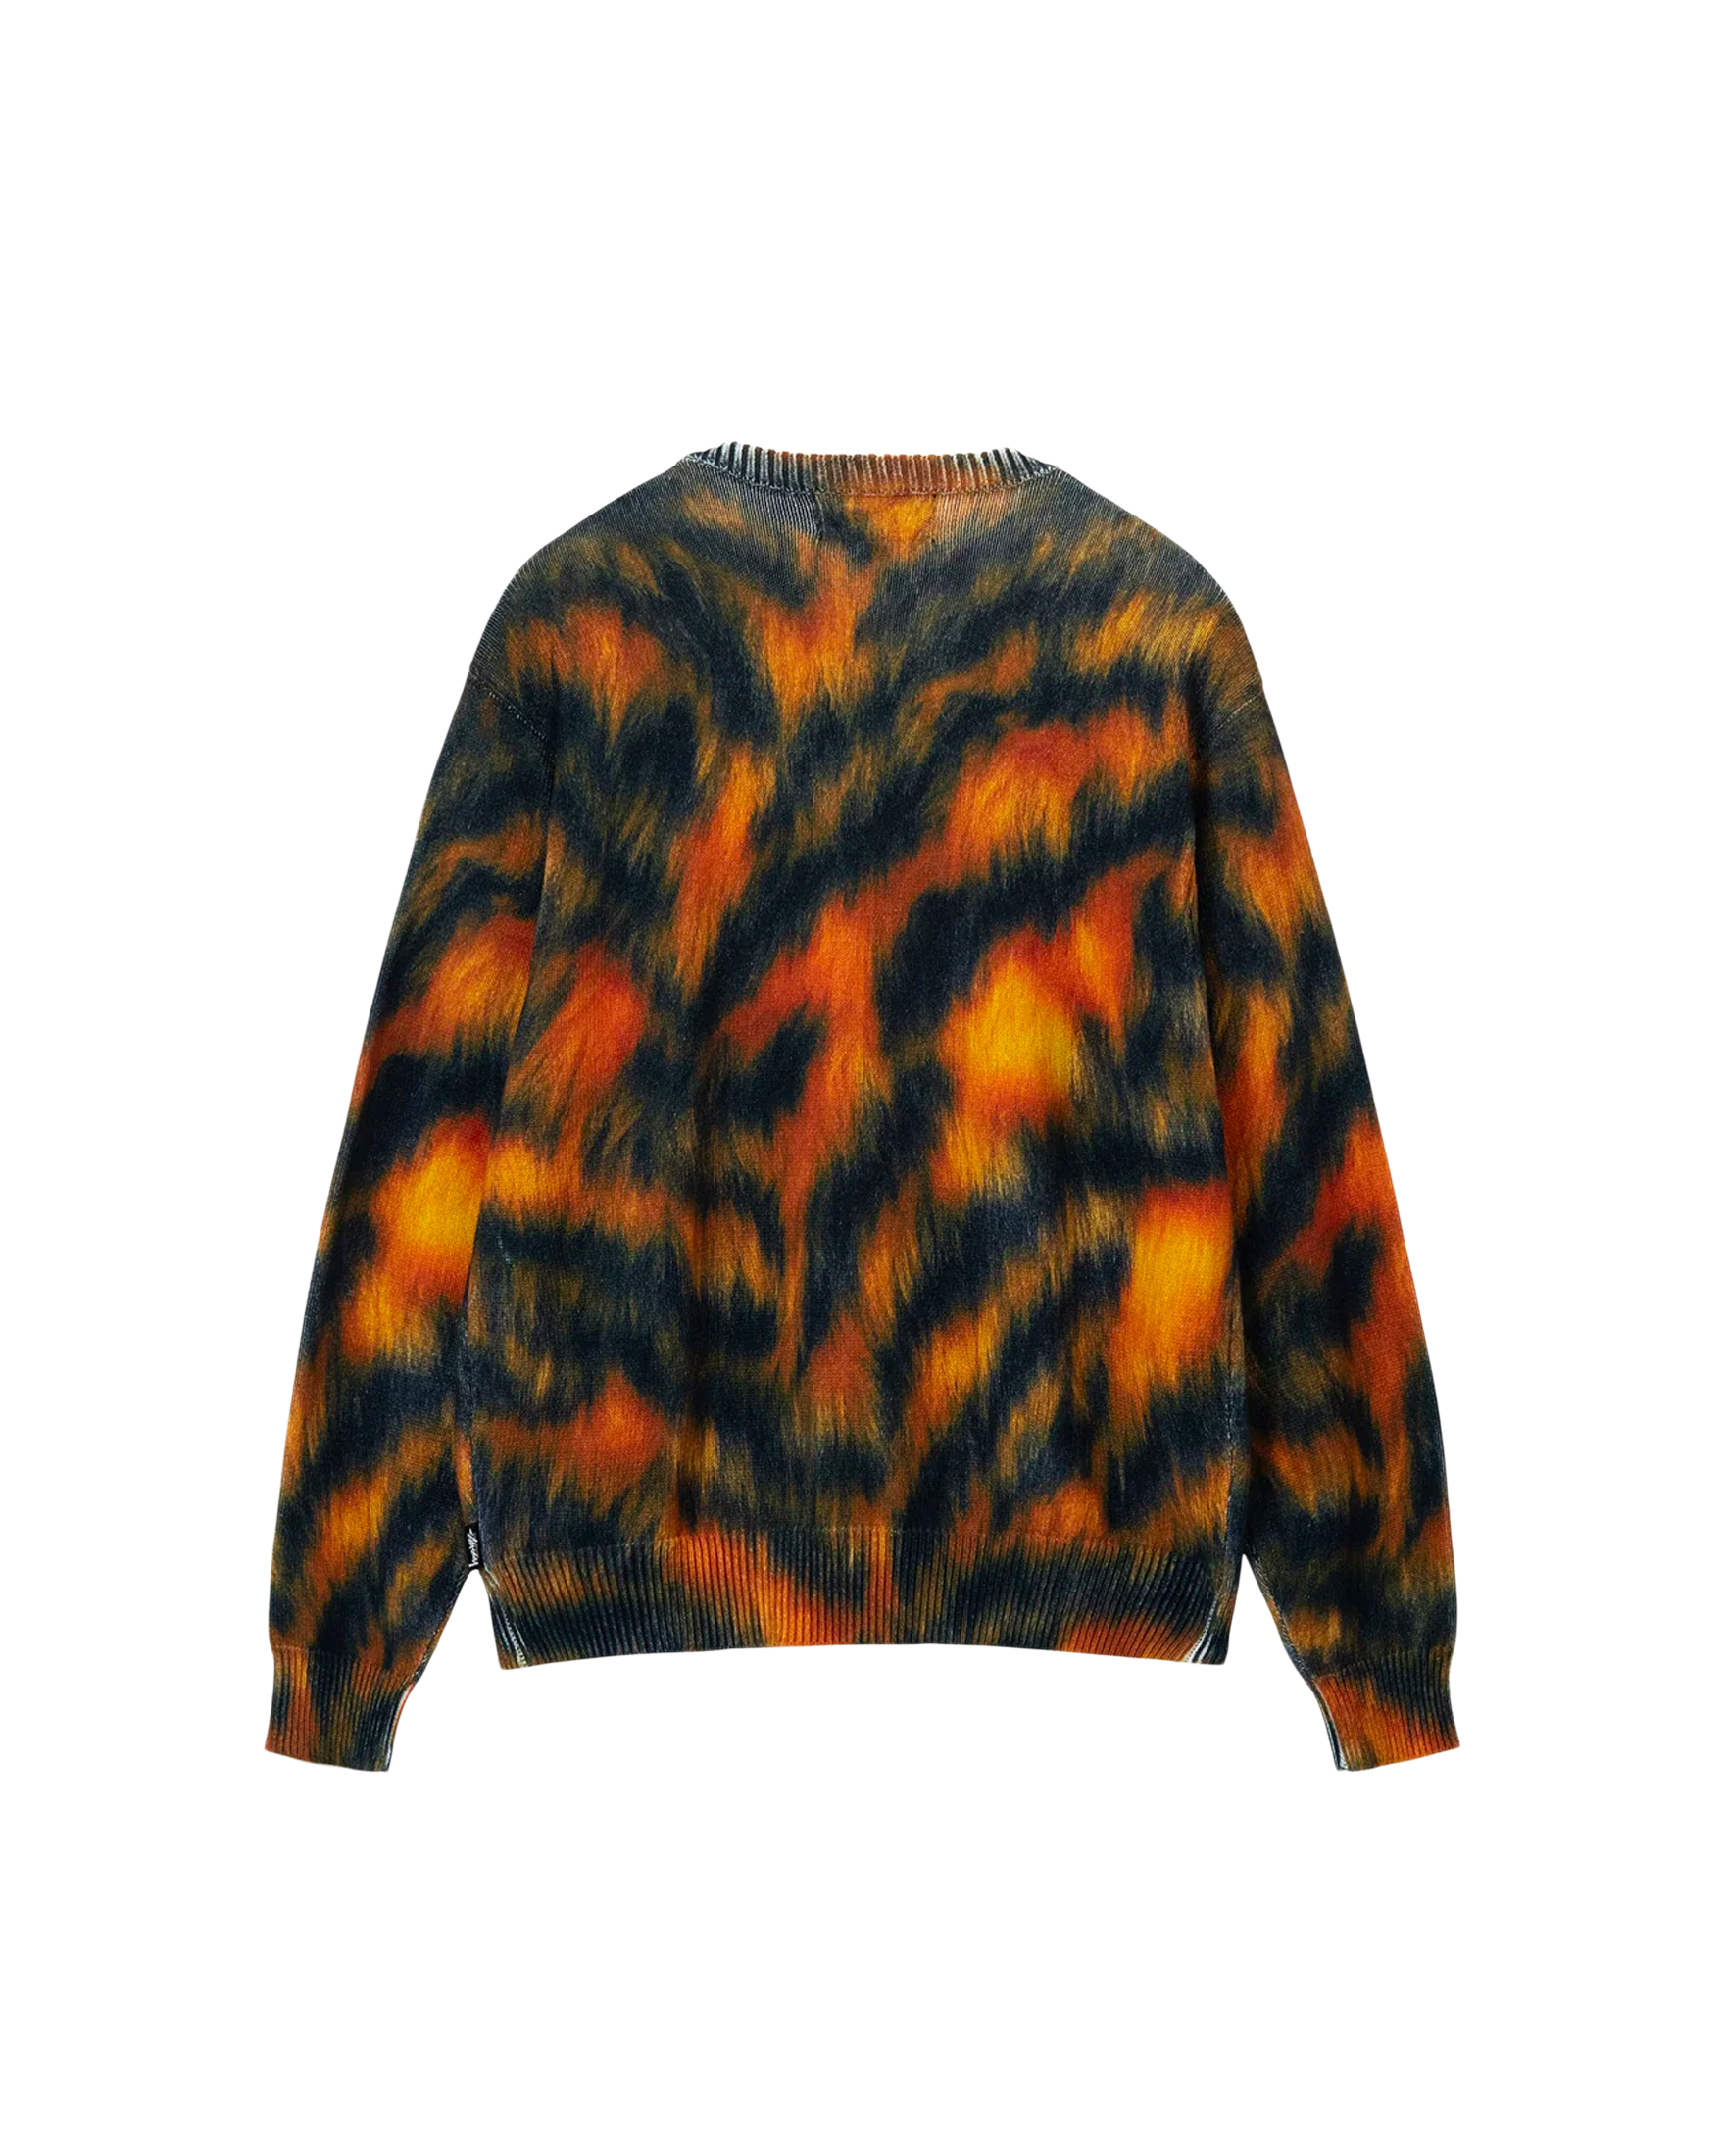 Printed Fur Sweater $77 Stüssy Tops Crewnecks Black